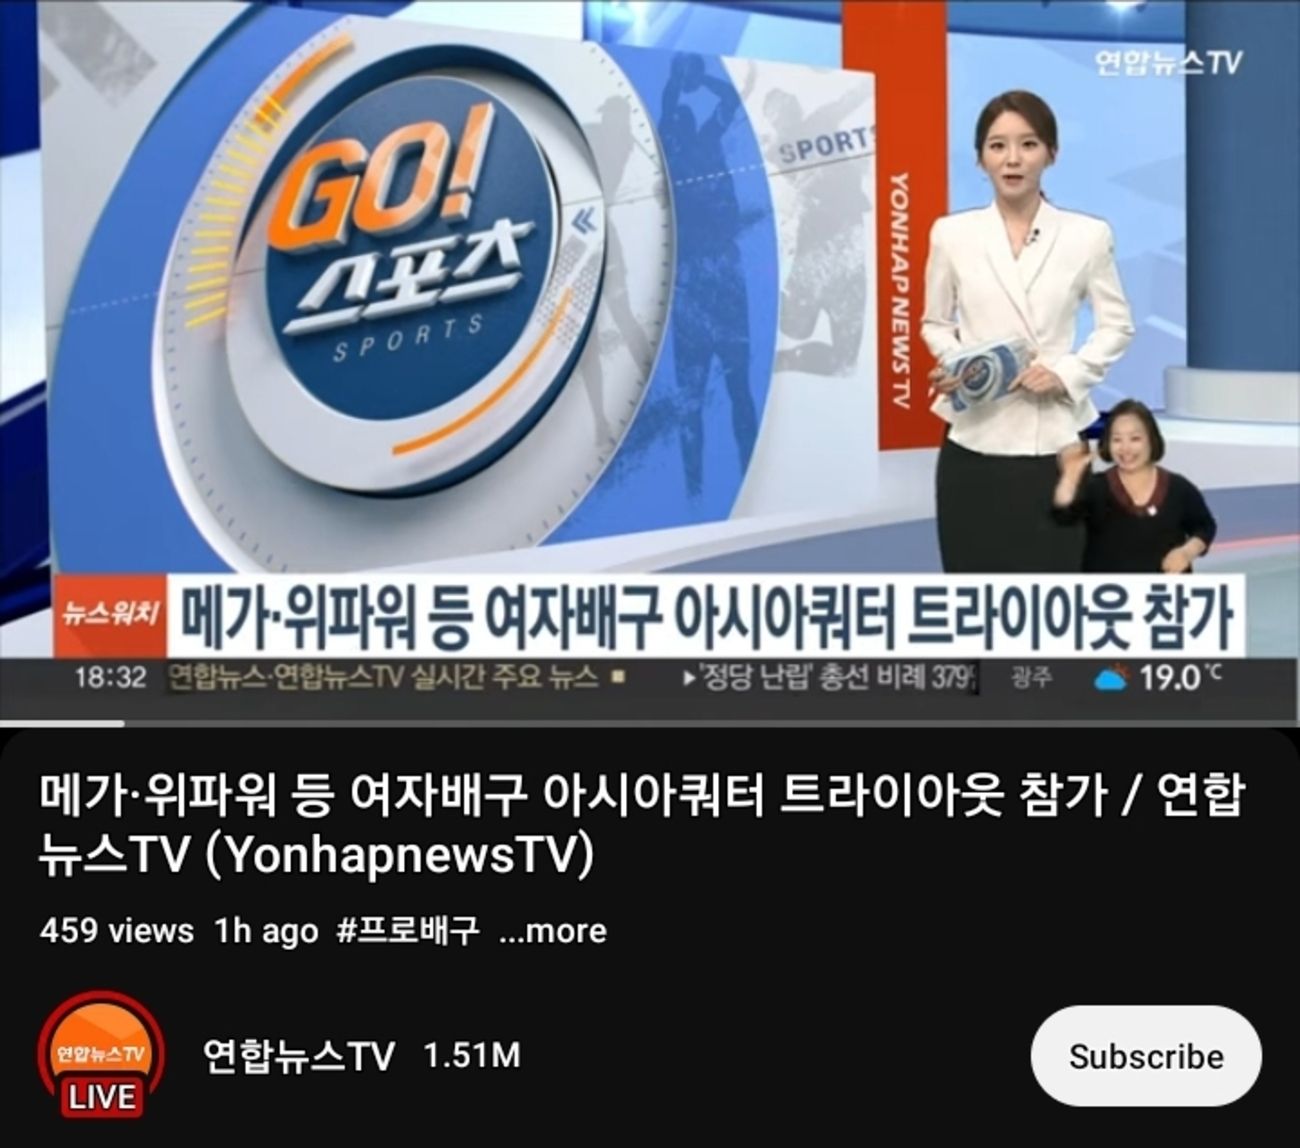 TV Korea Soroti Kembalinya Megawati Hangestri Ke V-League